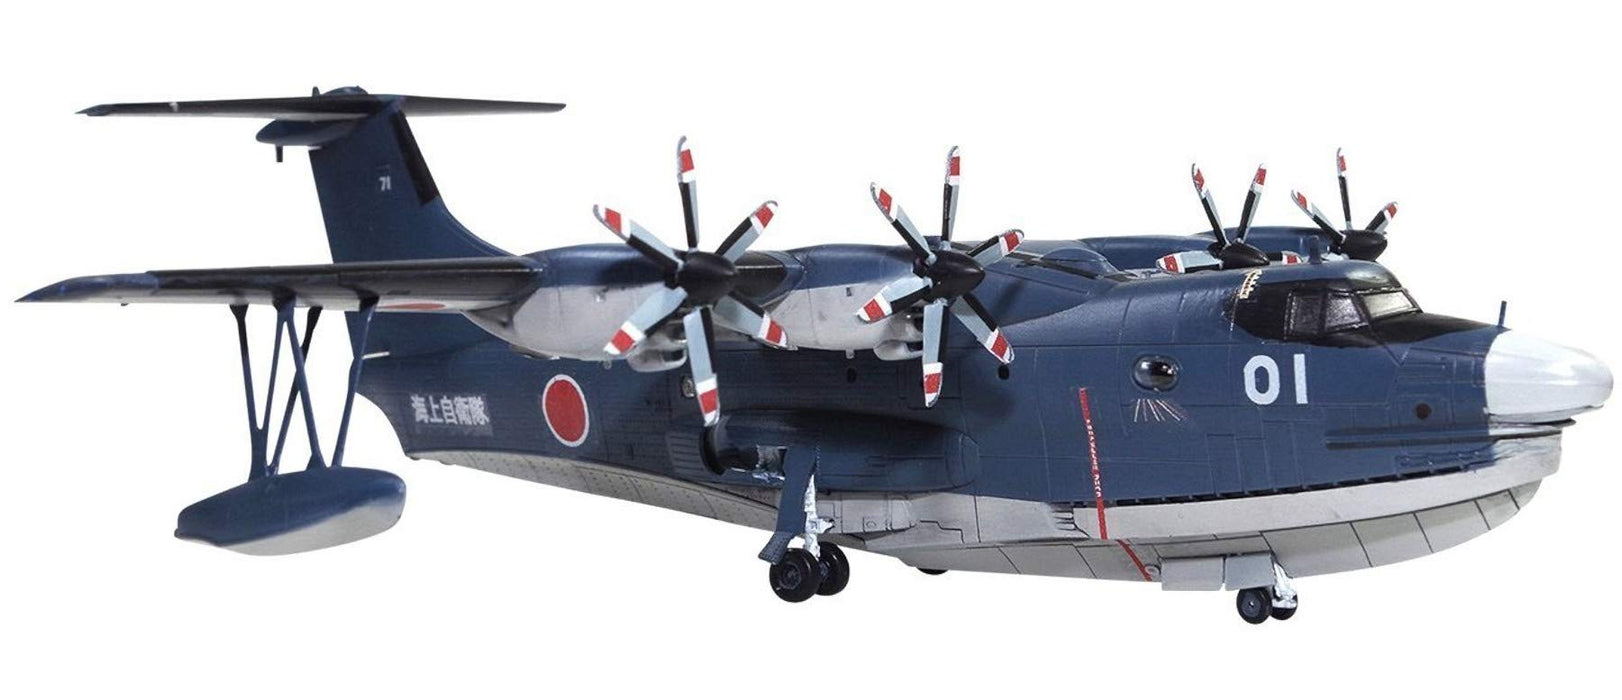 Qingdao Bunka Kyozai 1/144 Aircraft Maritime Self-Defense Force Rescue Amphibian Us-2 Modèle en plastique